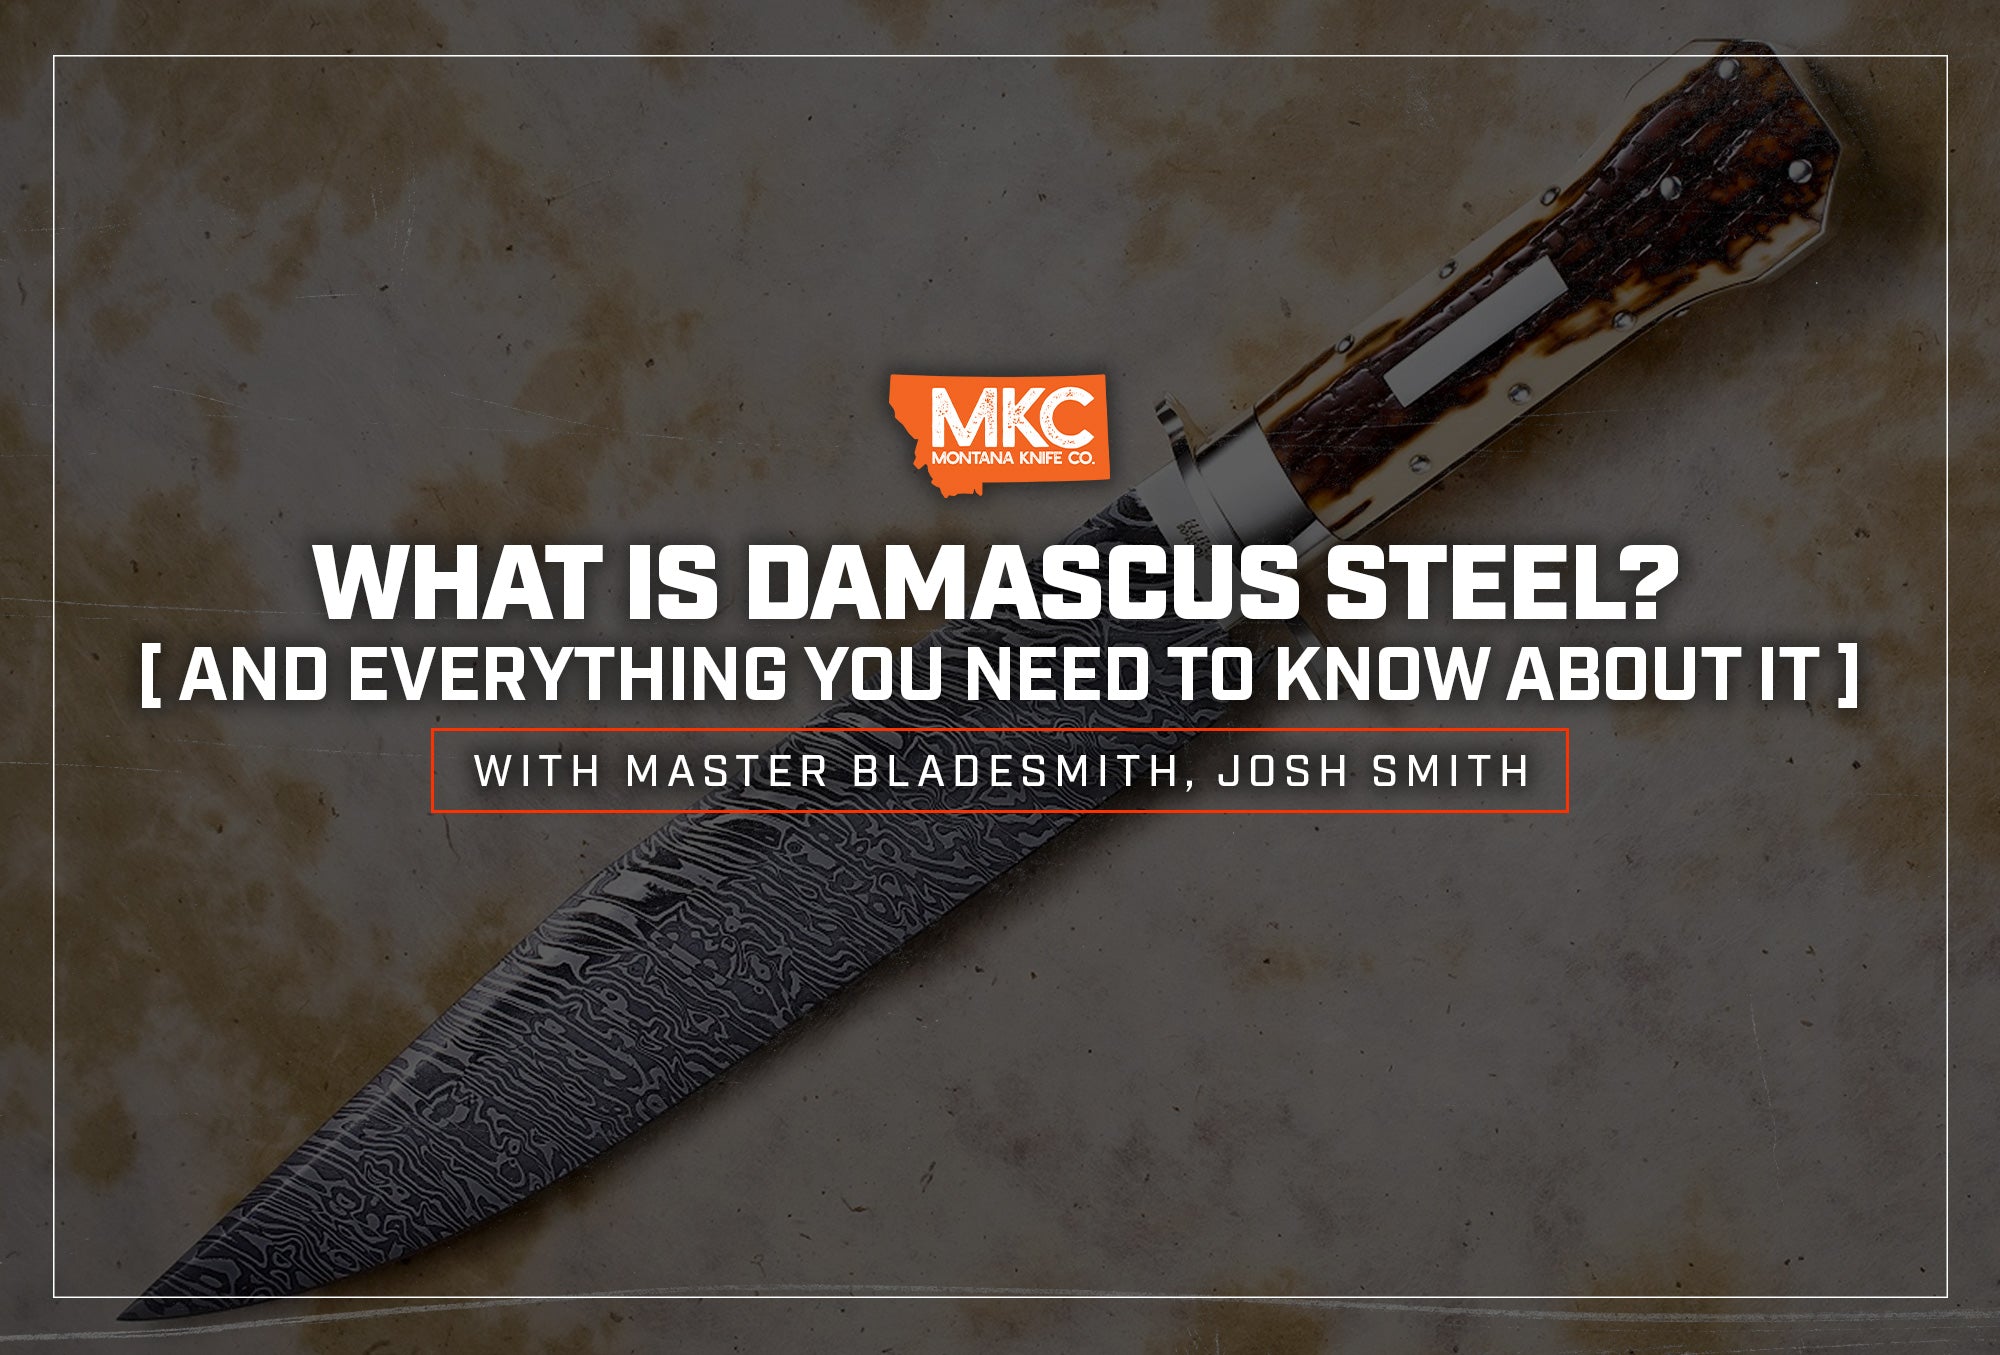 Best Knife Steel for Bladesmithing